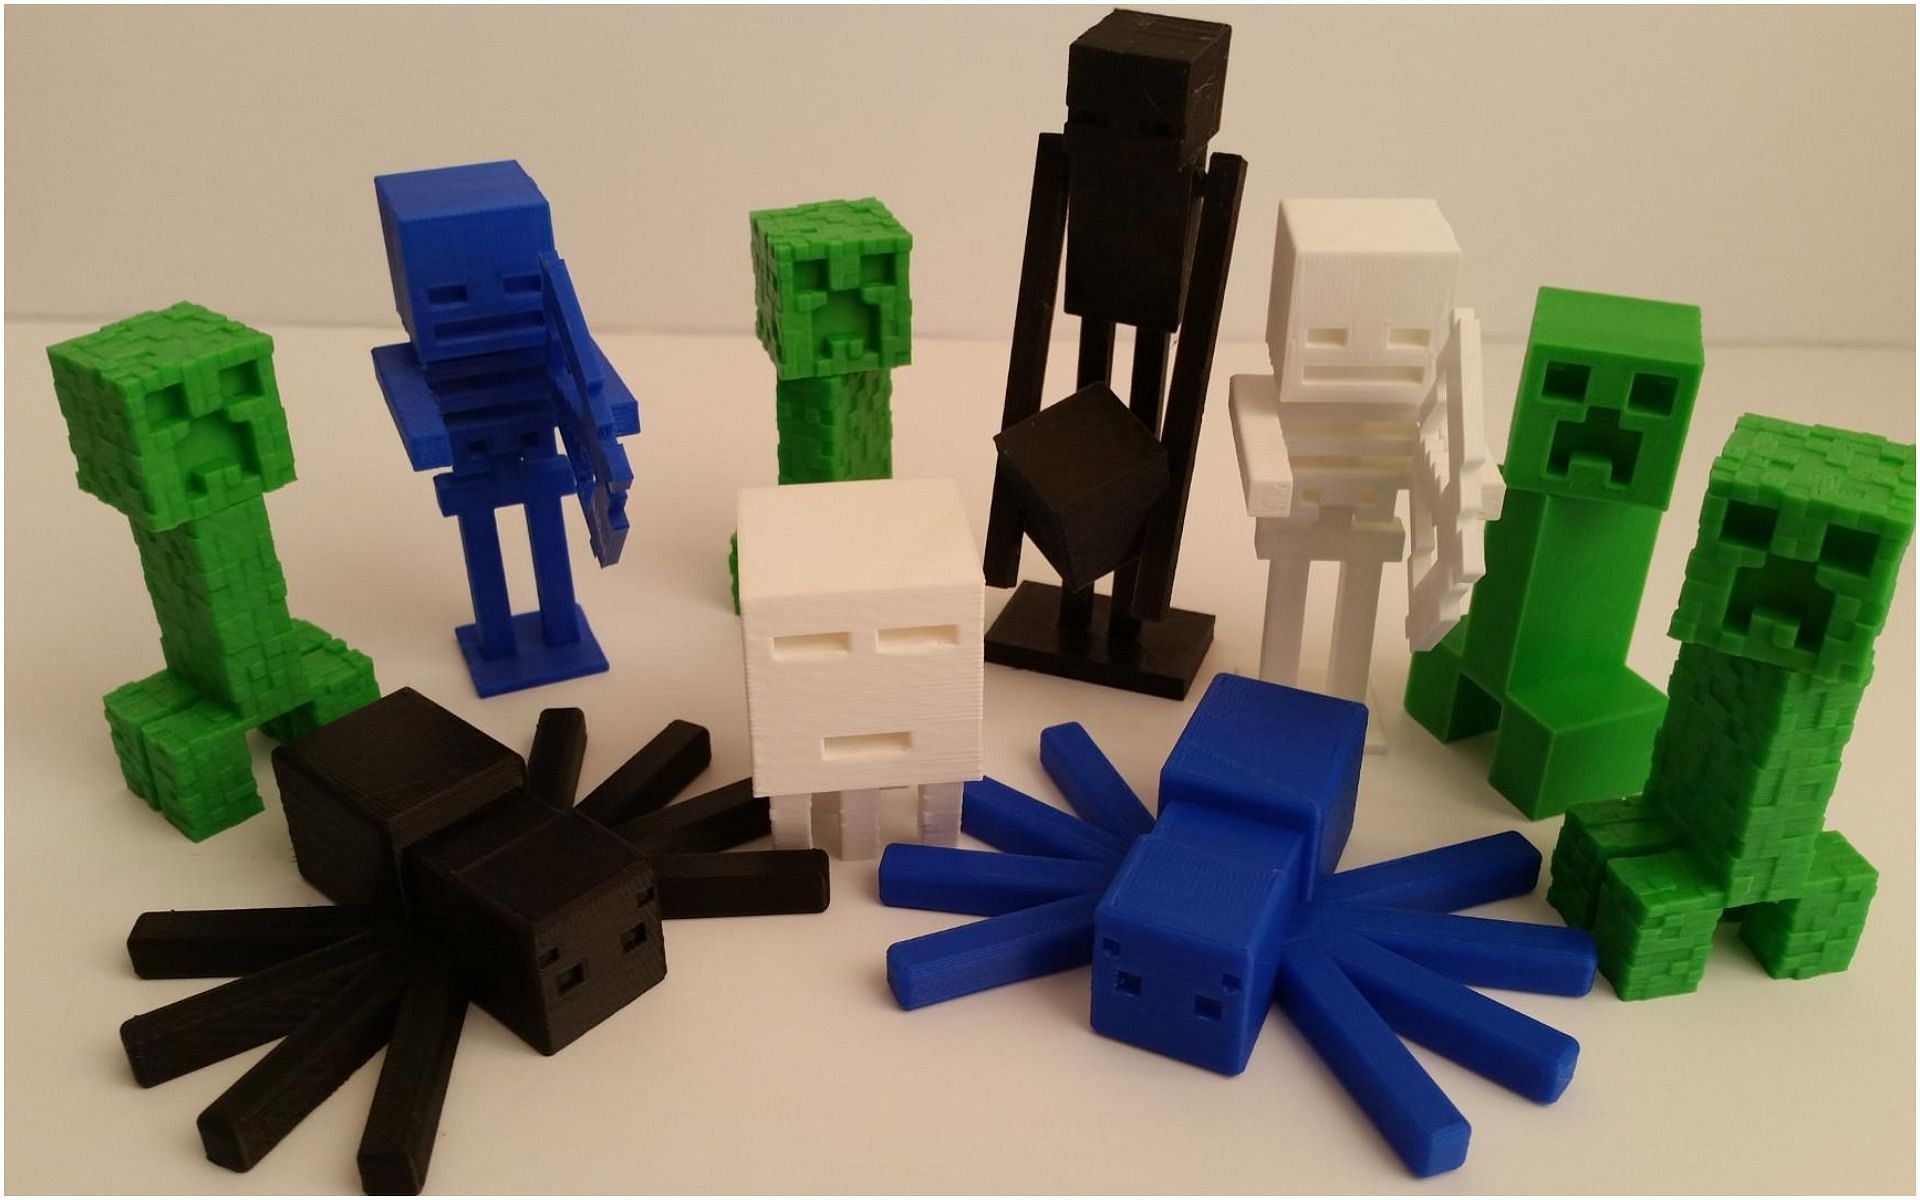 Some 3D printed Minecraft models (Image via 3dwithus.com)